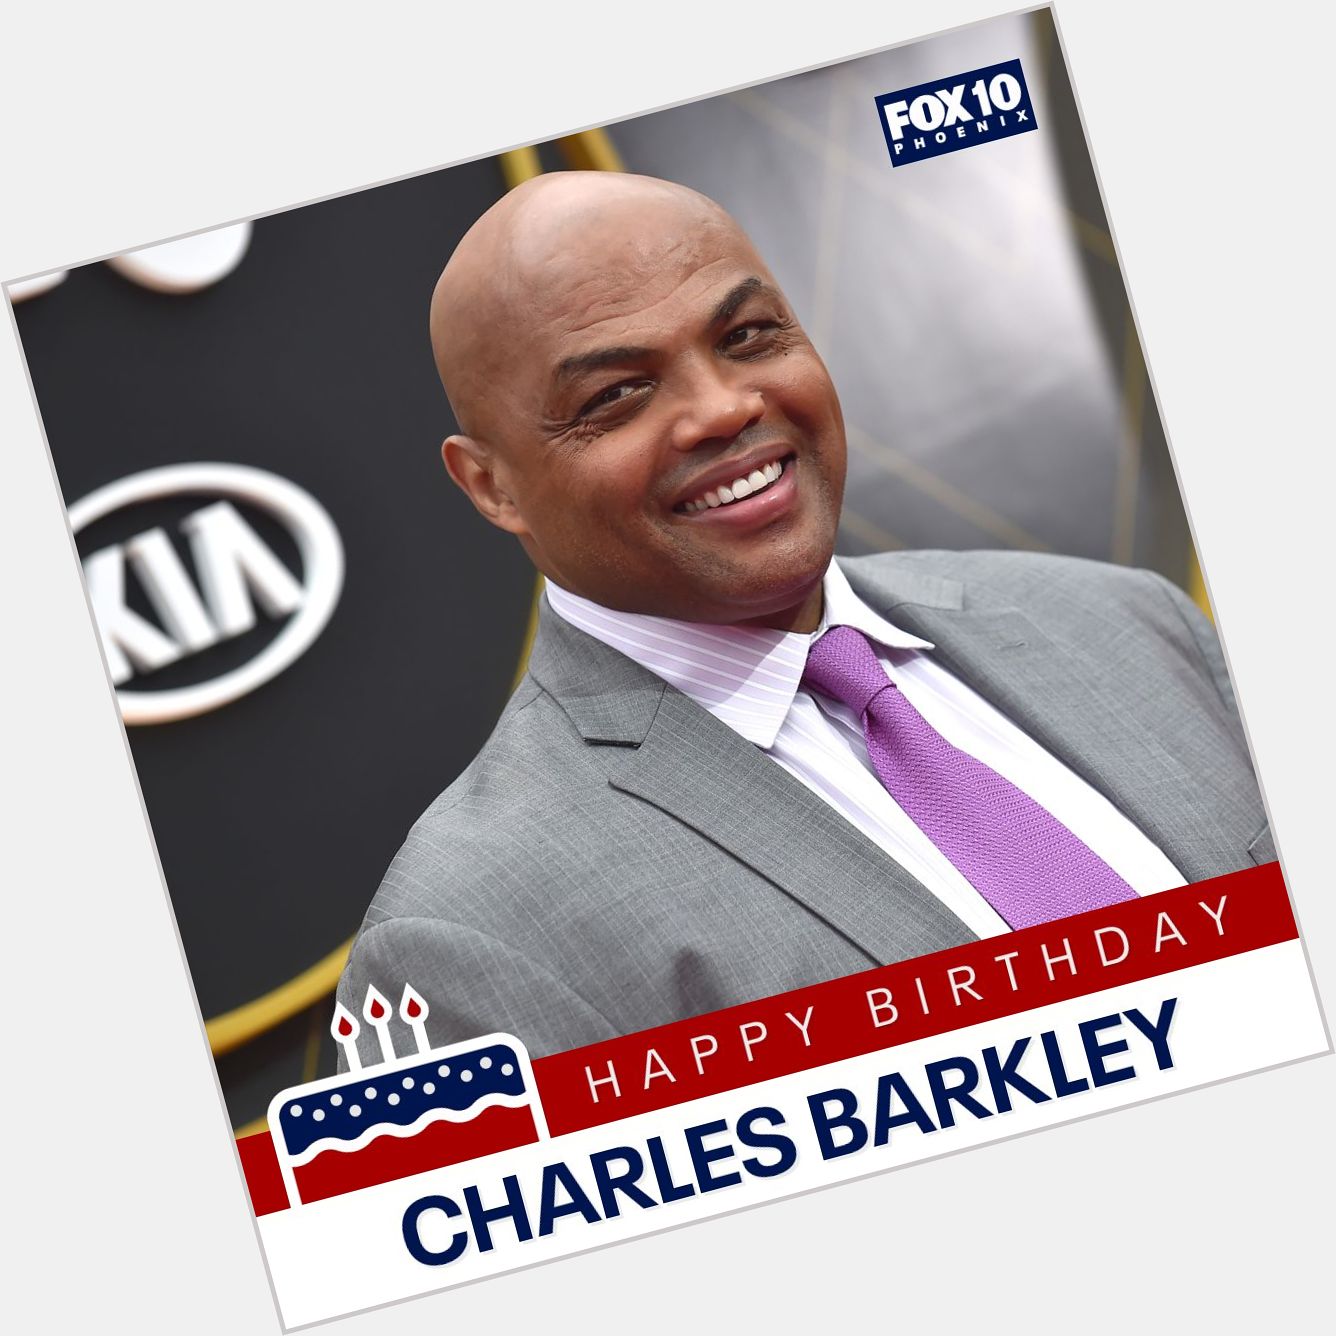 HAPPY BIRTHDAY, CHUCK! Phoenix Suns and NBA legend Charles Barkley turns 60 today!  